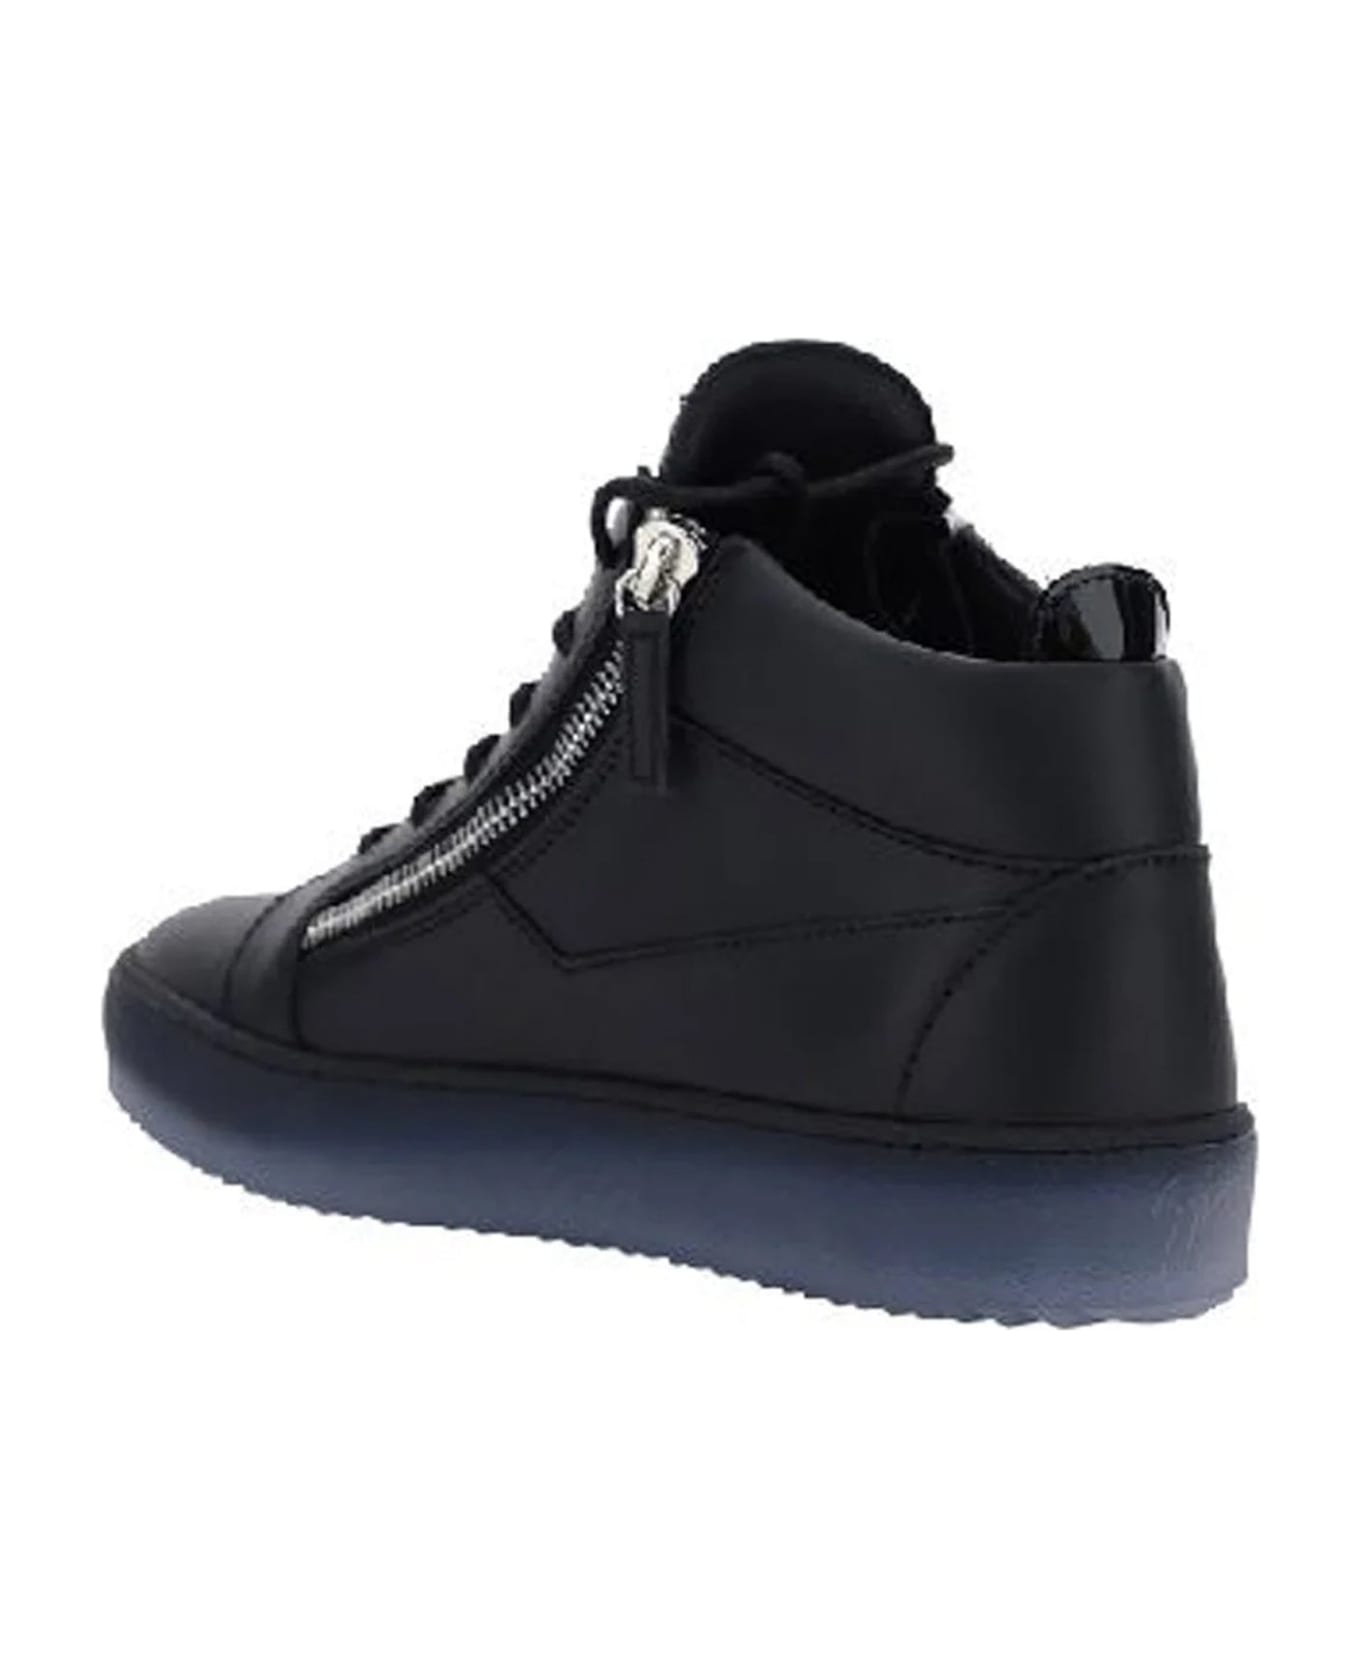 Giuseppe Zanotti May London Sneakers - Black